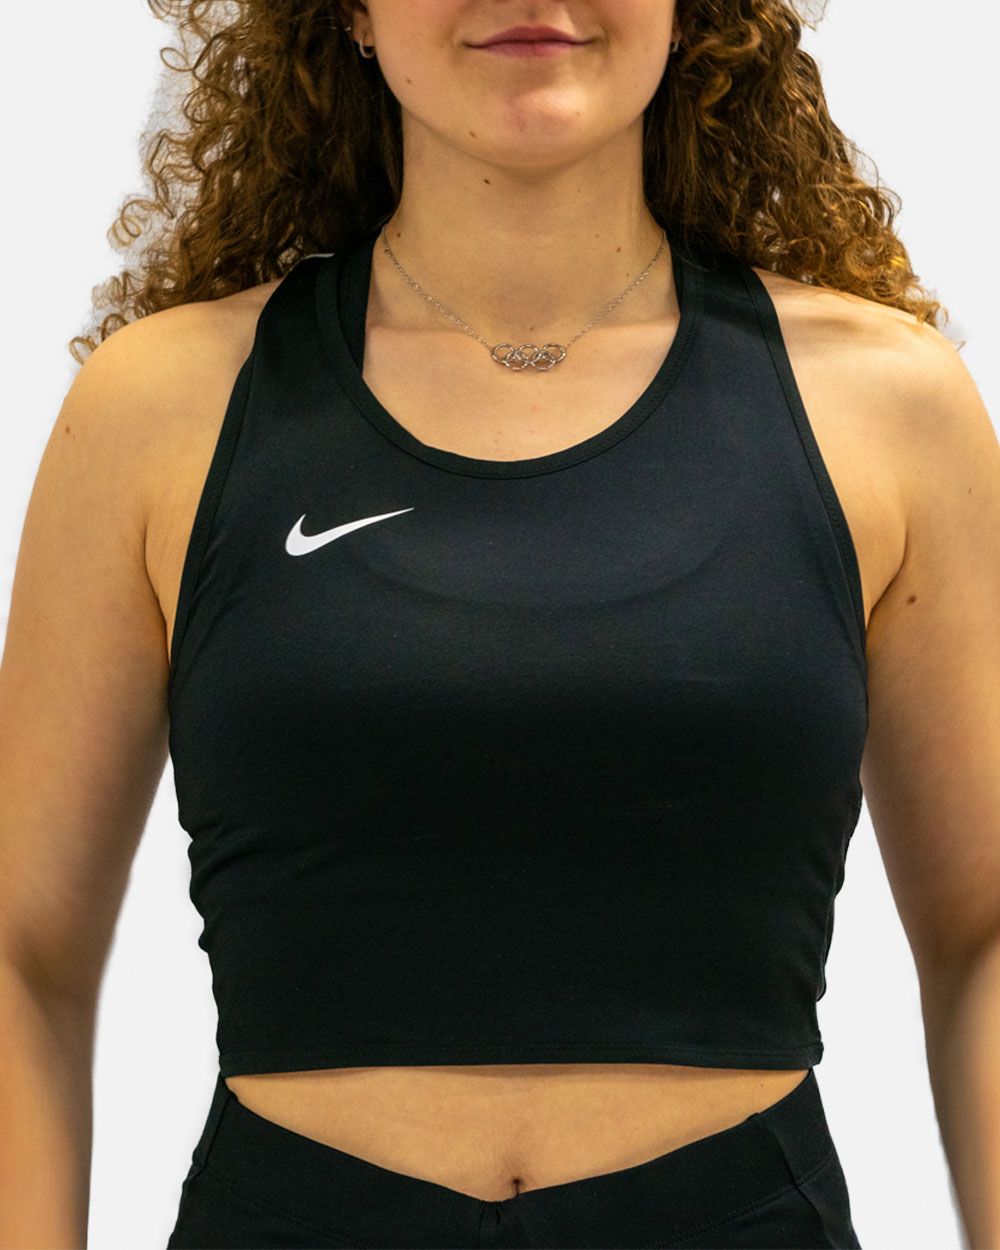 Débardeur de running Nike Stock pour Femme - NT0312